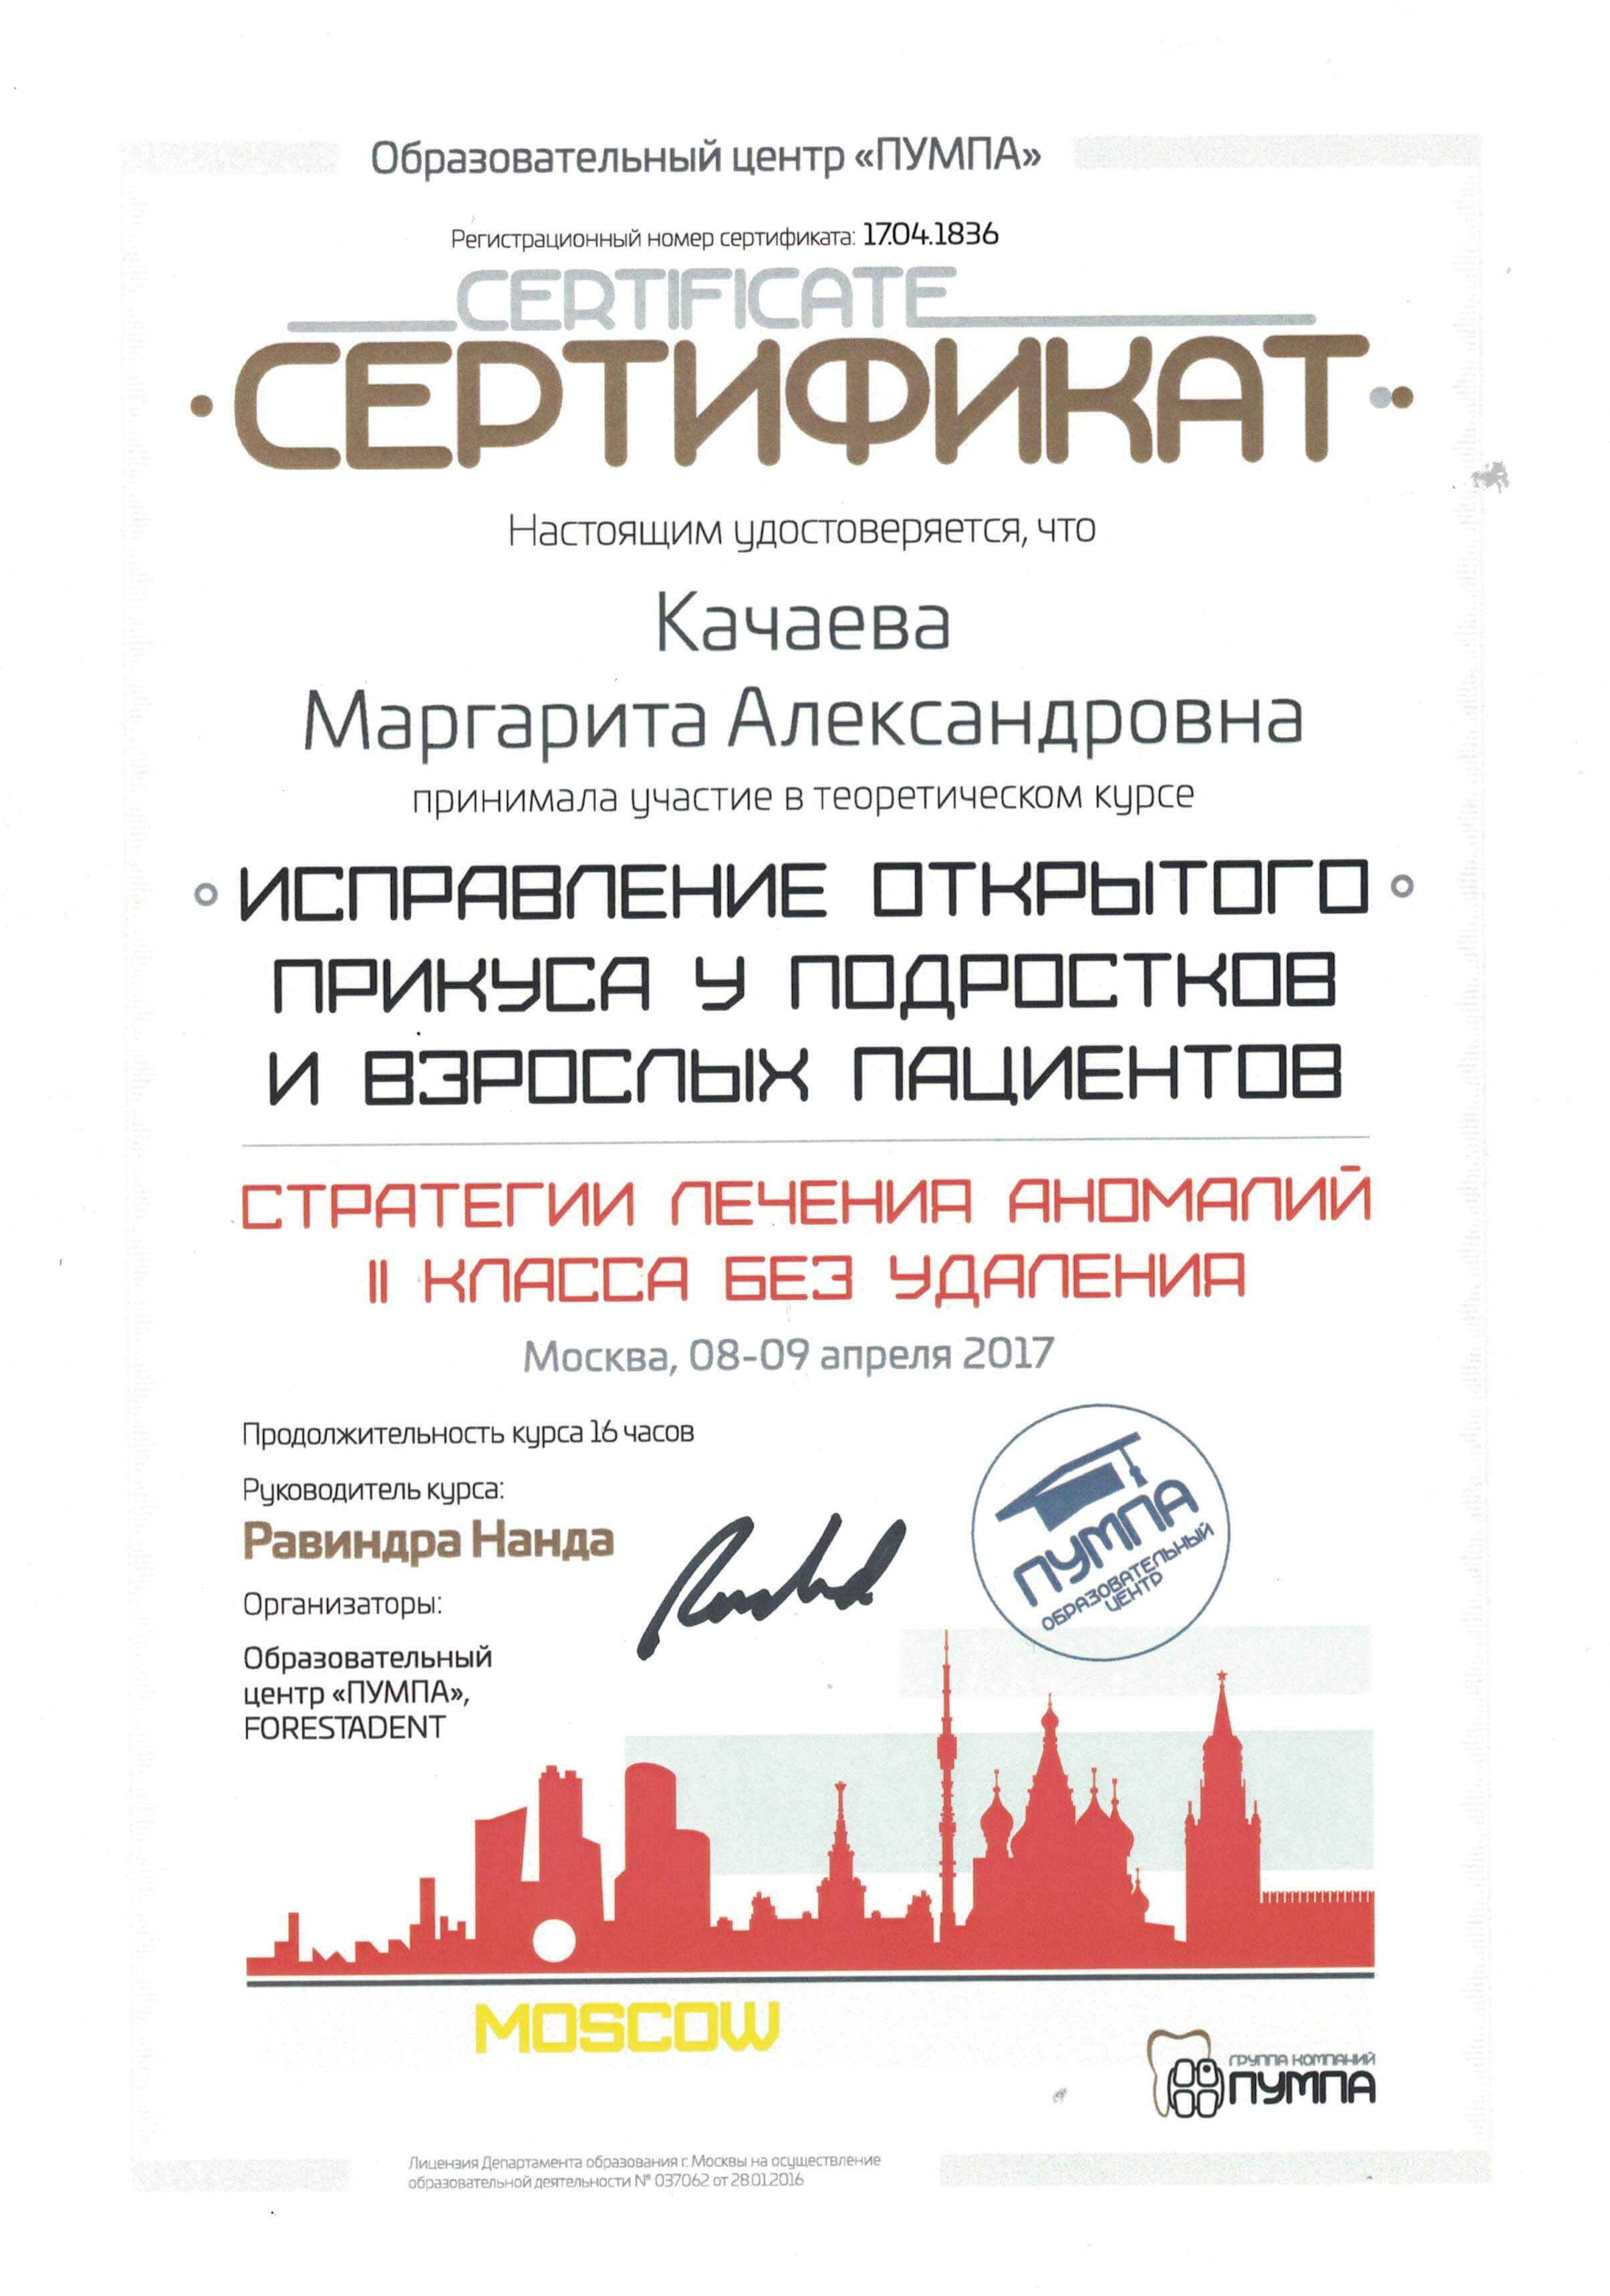 Сертификат Качаева М.А.